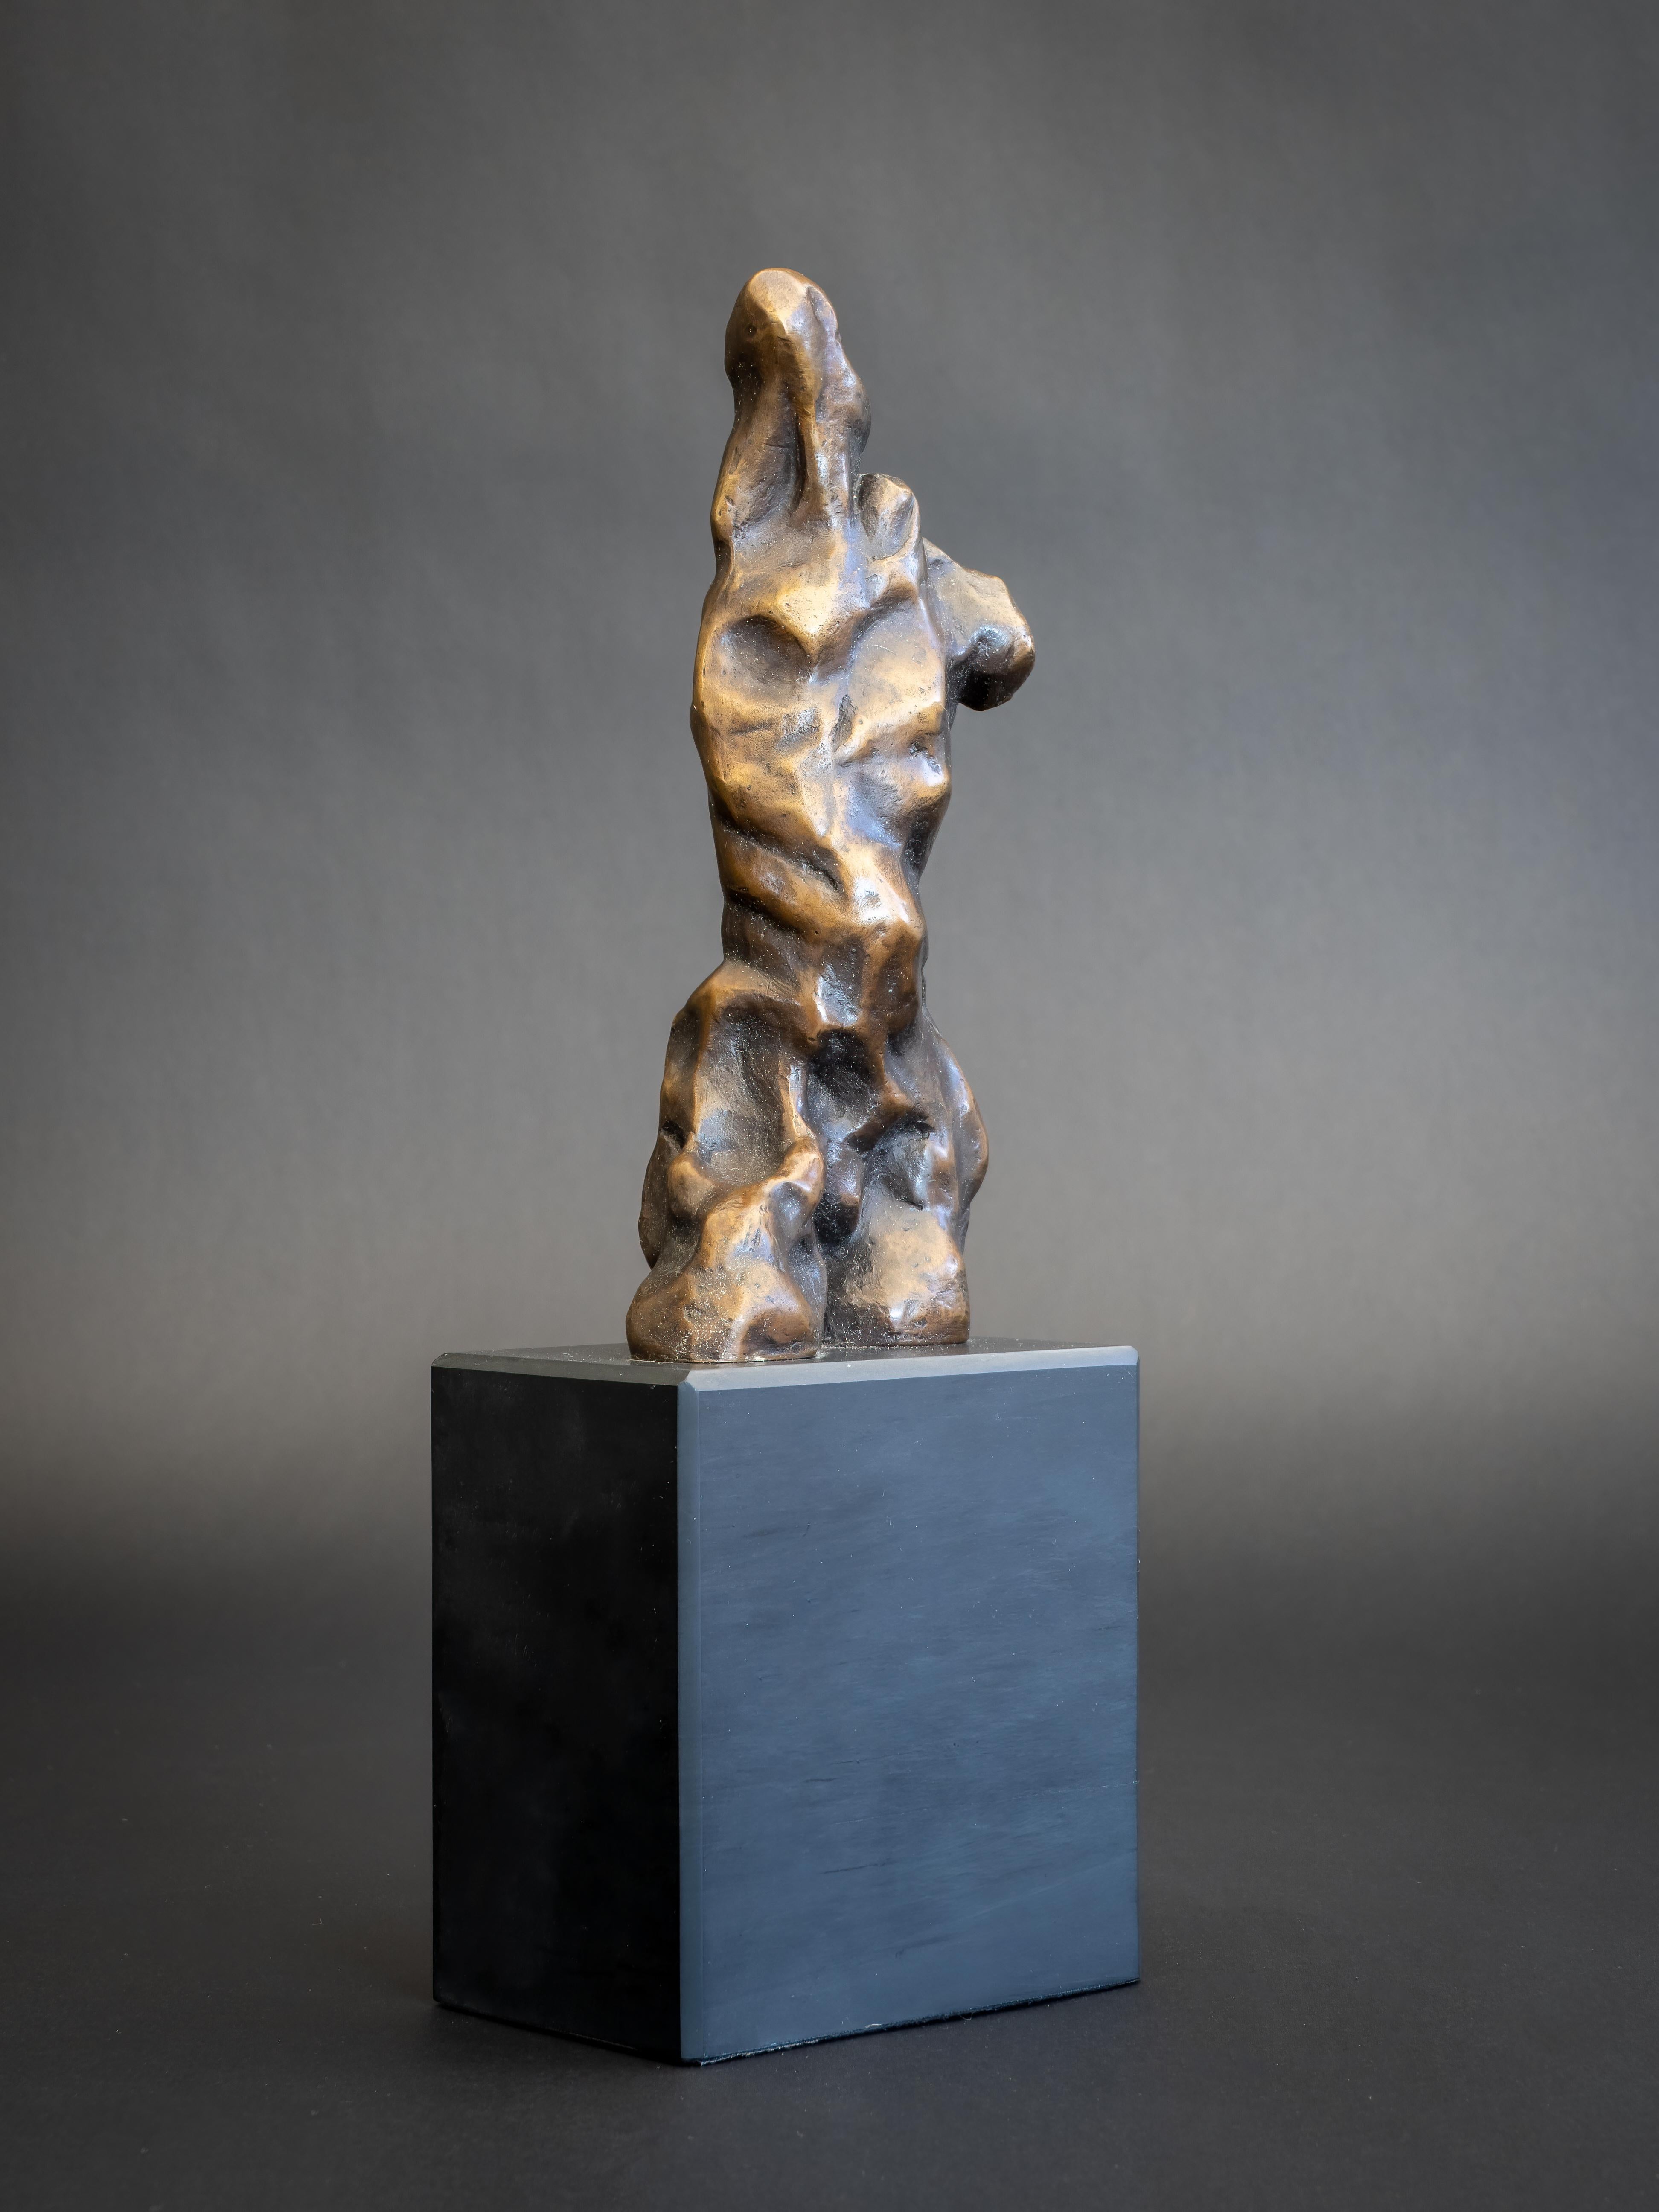 Adam II - Originale figurative Bronzeskulpturen - Kunstwerke zum Verkauf - Zeitgenössische Kunst